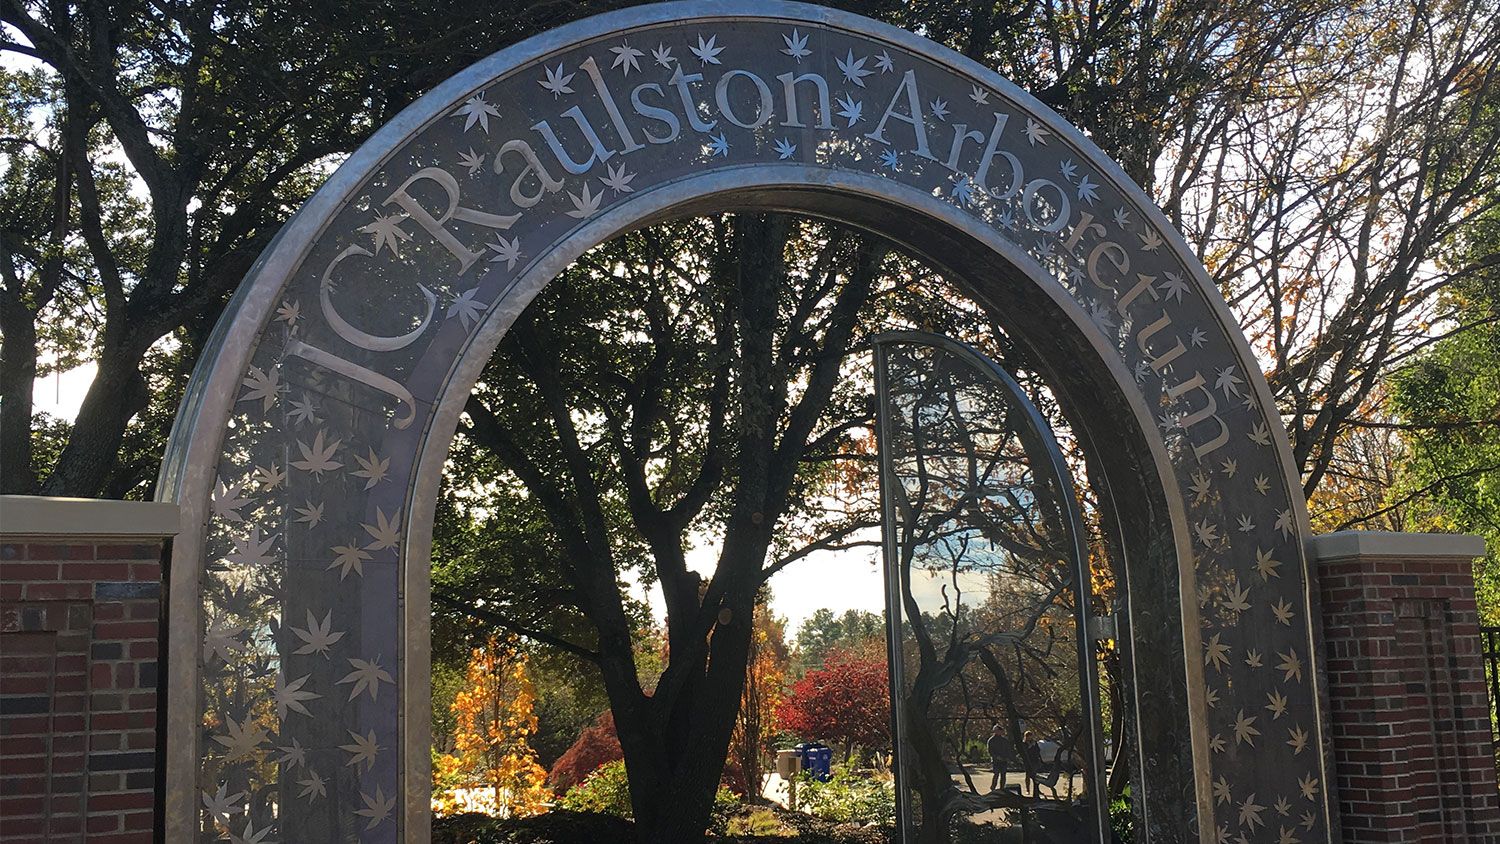 The JC Raulston Arboretum gate.